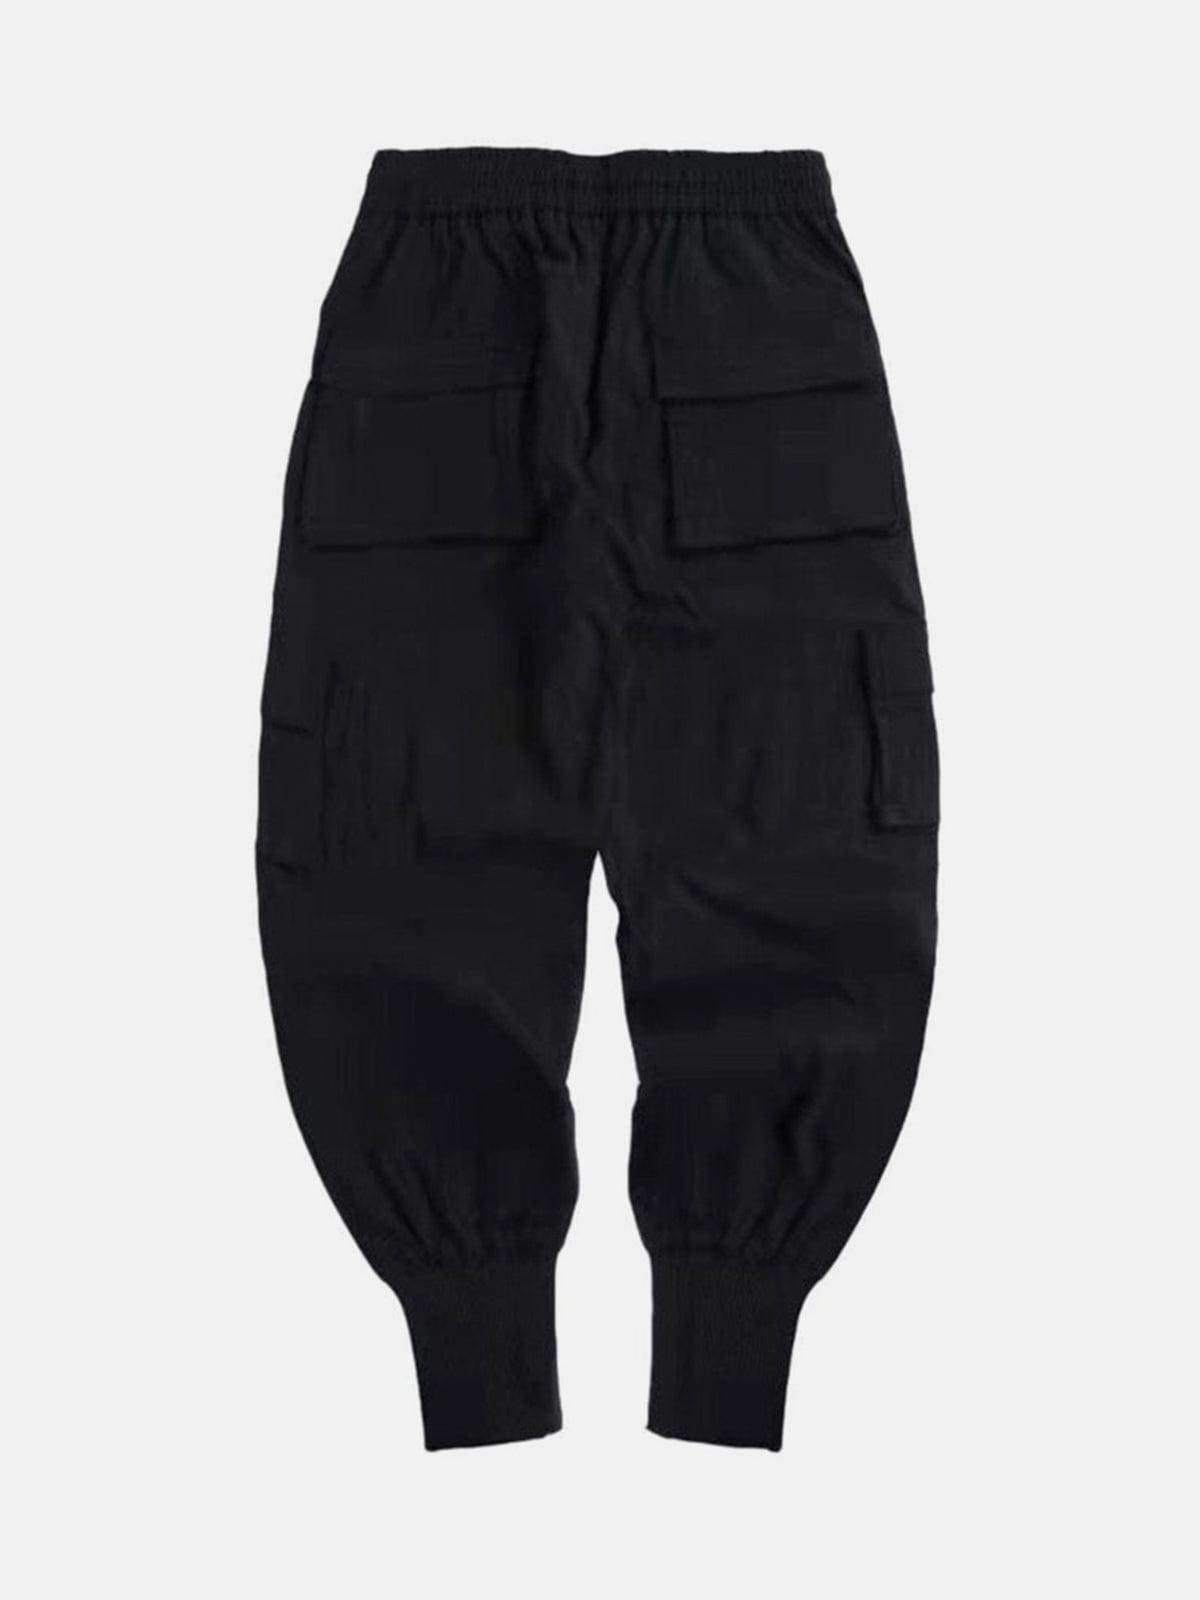 Multi Pockets Drawstring Zipper Pants Streetwear Brand Techwear Combat Tactical YUGEN THEORY